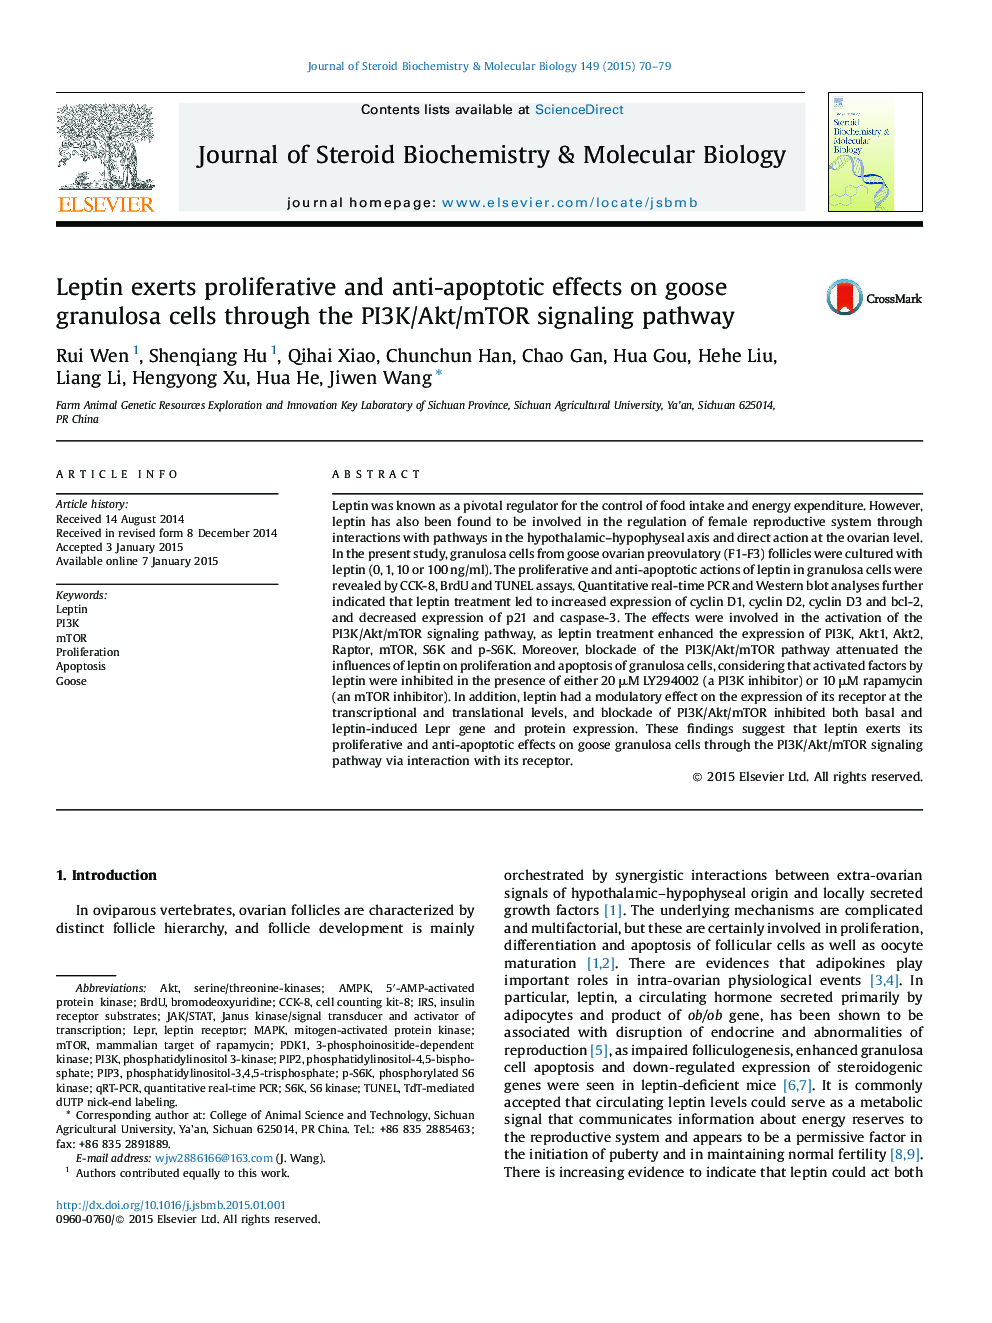 Leptin exerts proliferative and anti-apoptotic effects on goose granulosa cells through the PI3K/Akt/mTOR signaling pathway